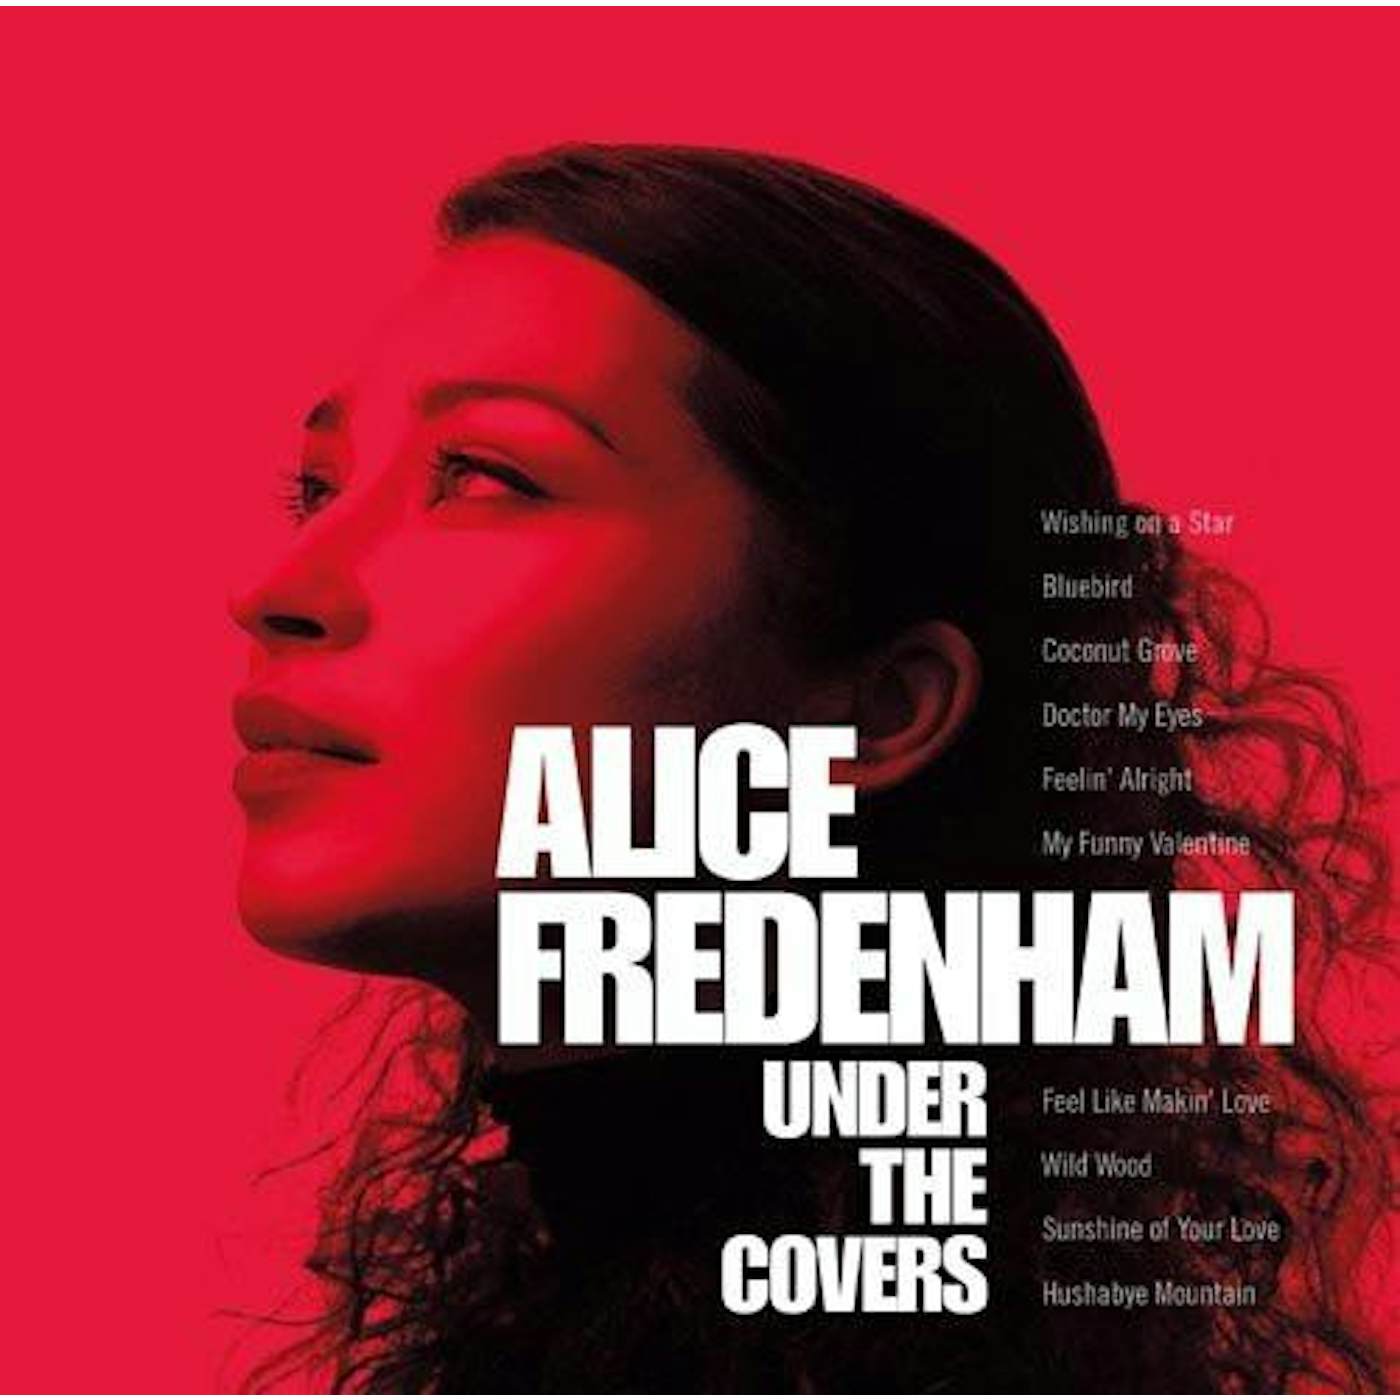 Alice Fredenham UNDER THE COVERS CD